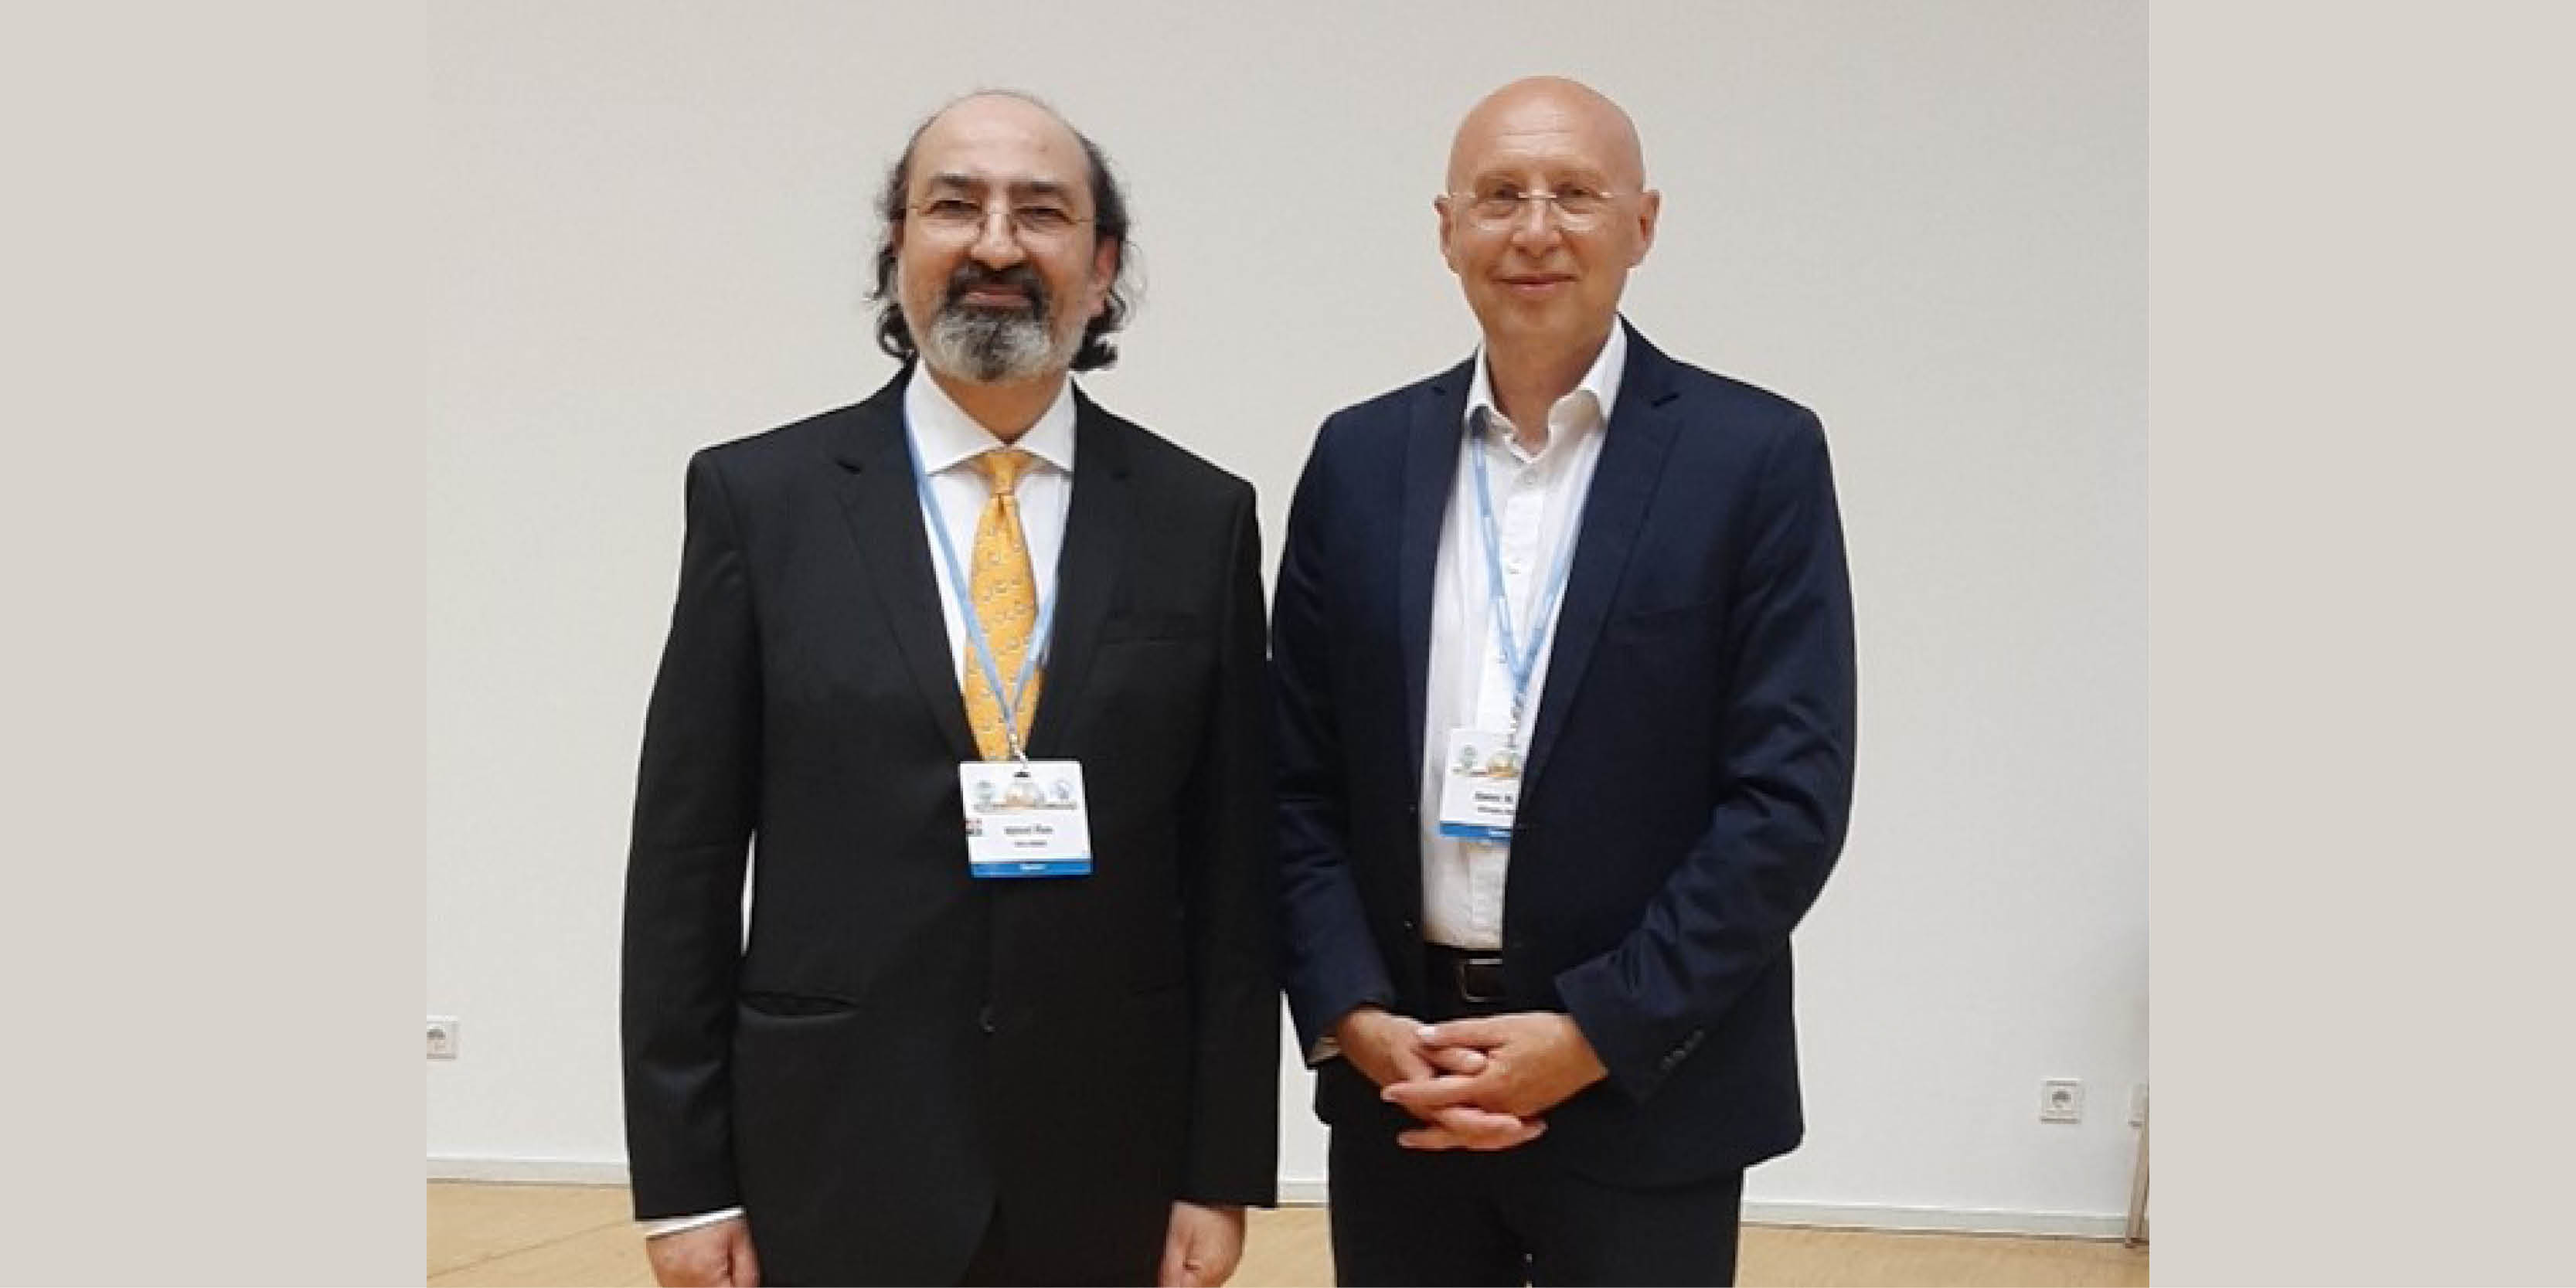  Professor Nabeel Riza chairs Nobel Prize lecture at international optics congress